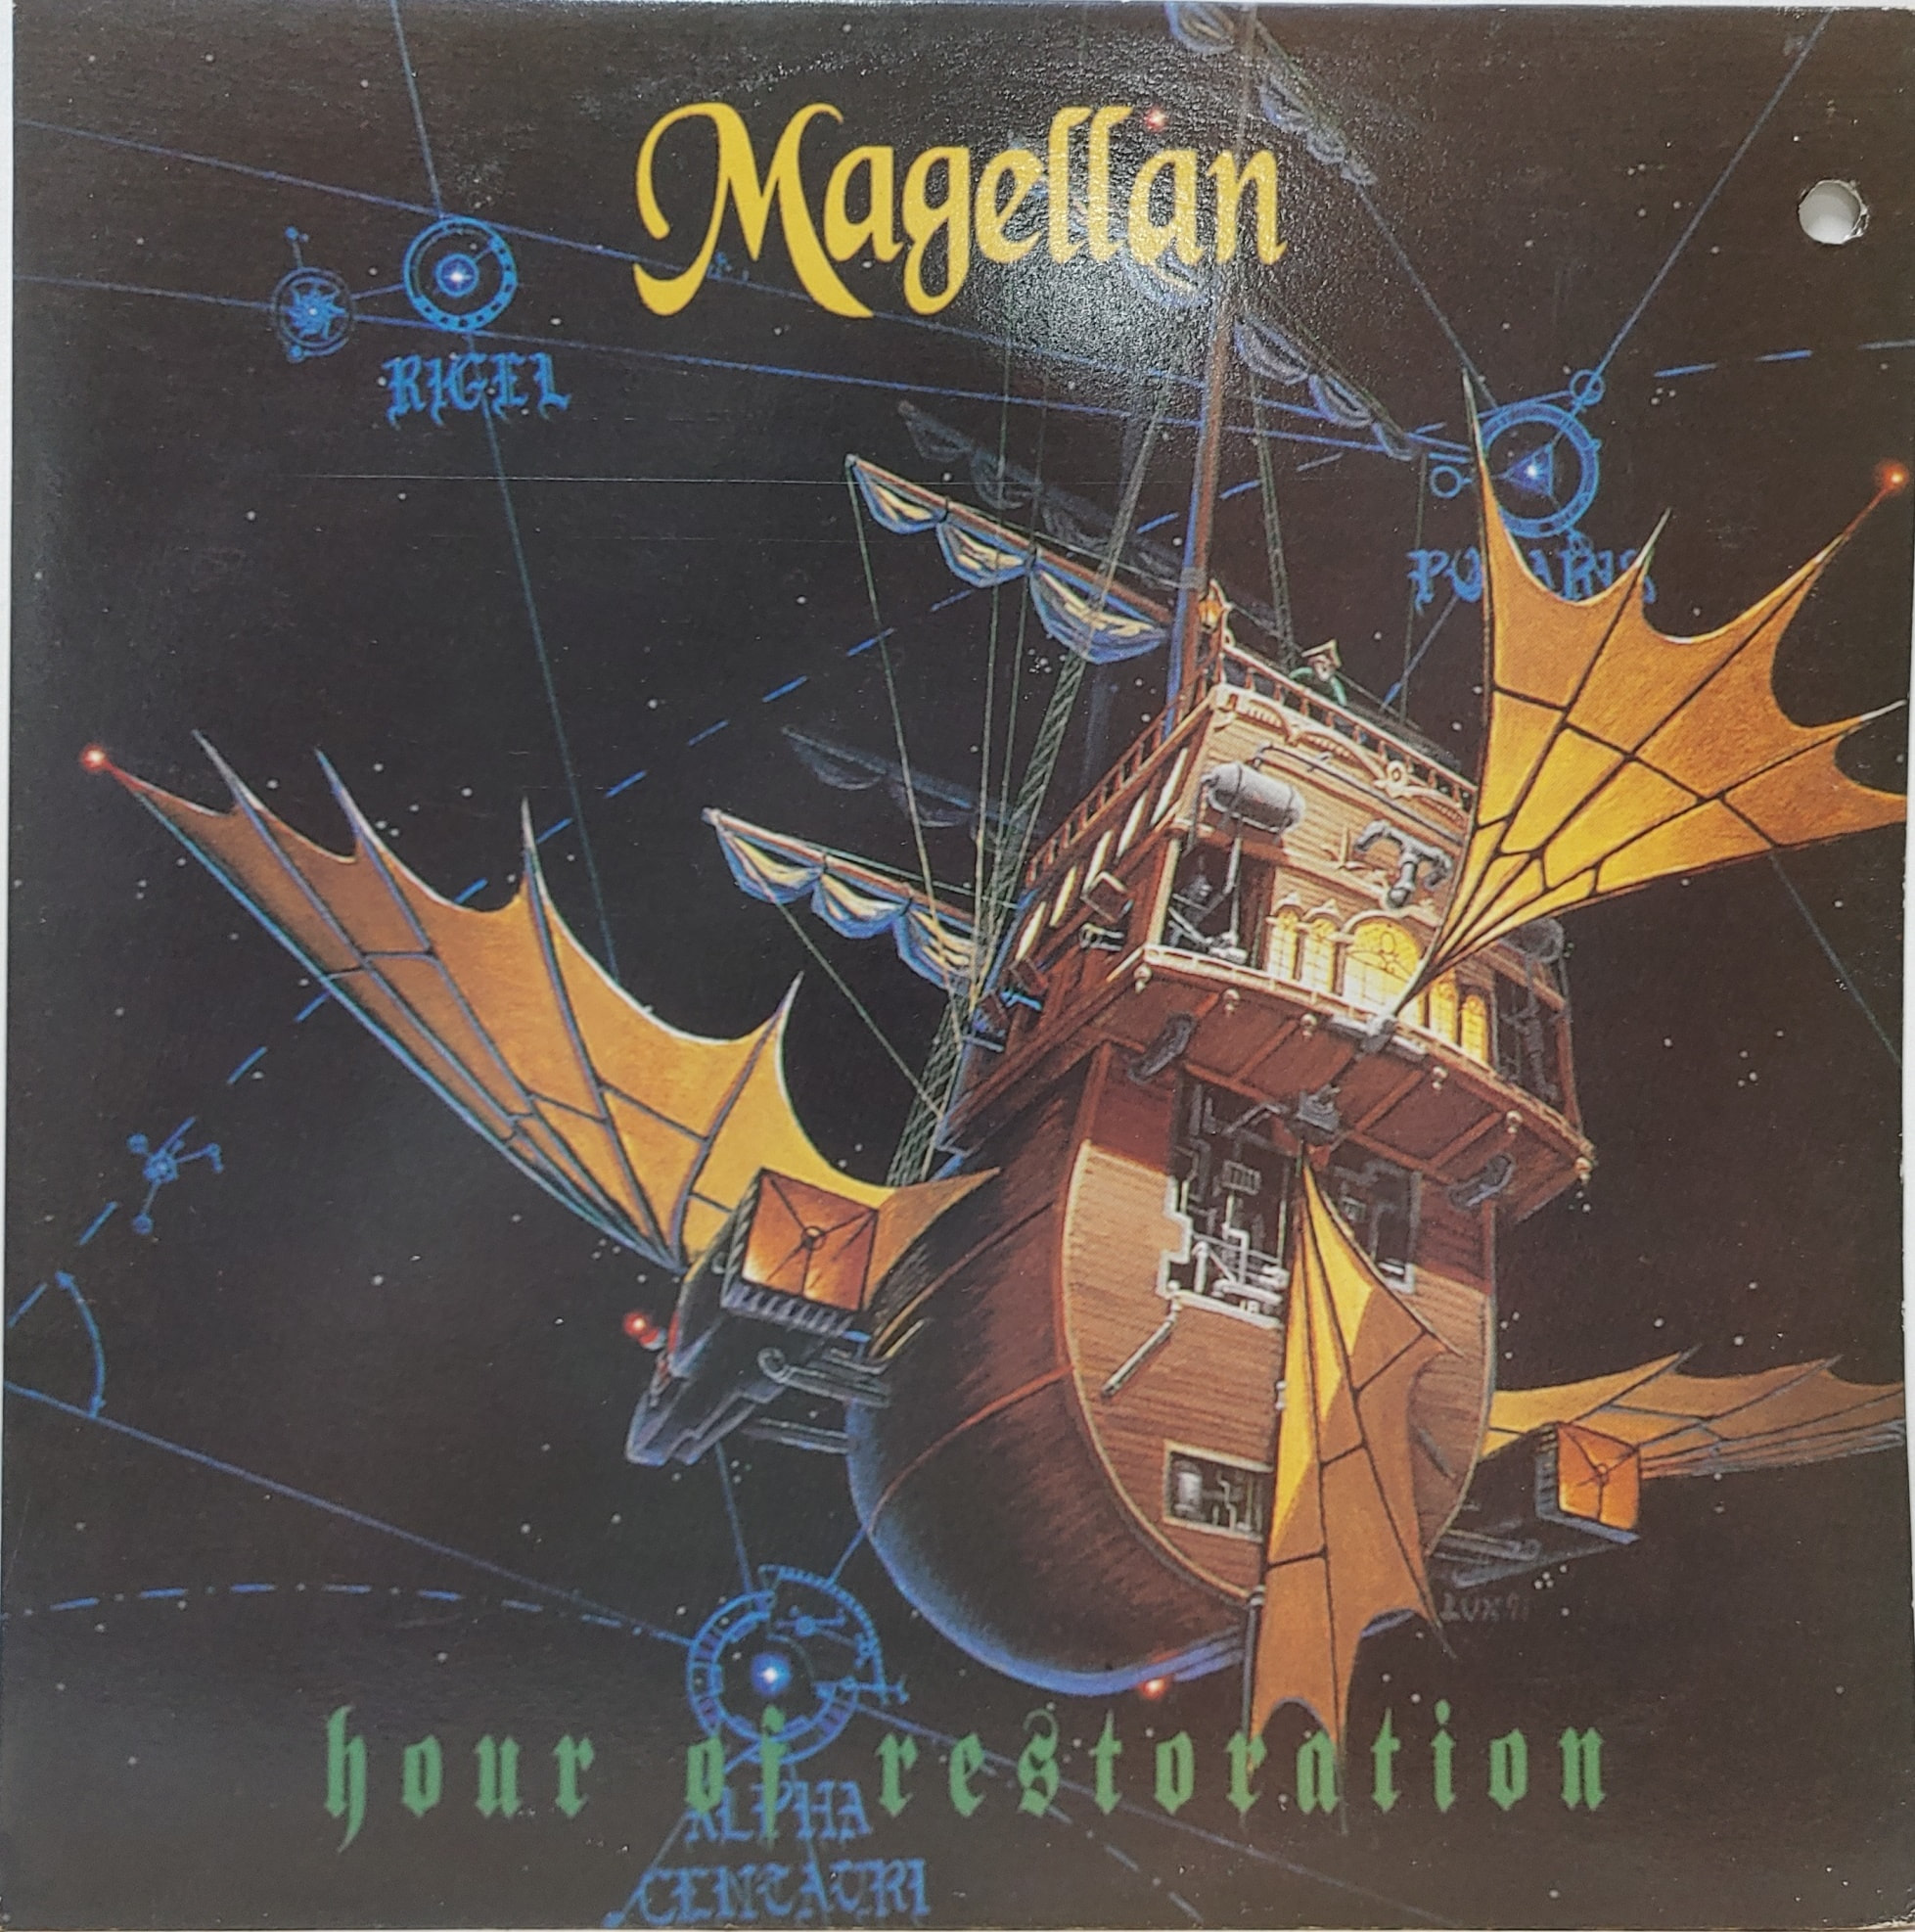 Magellan / Hour of Restoration